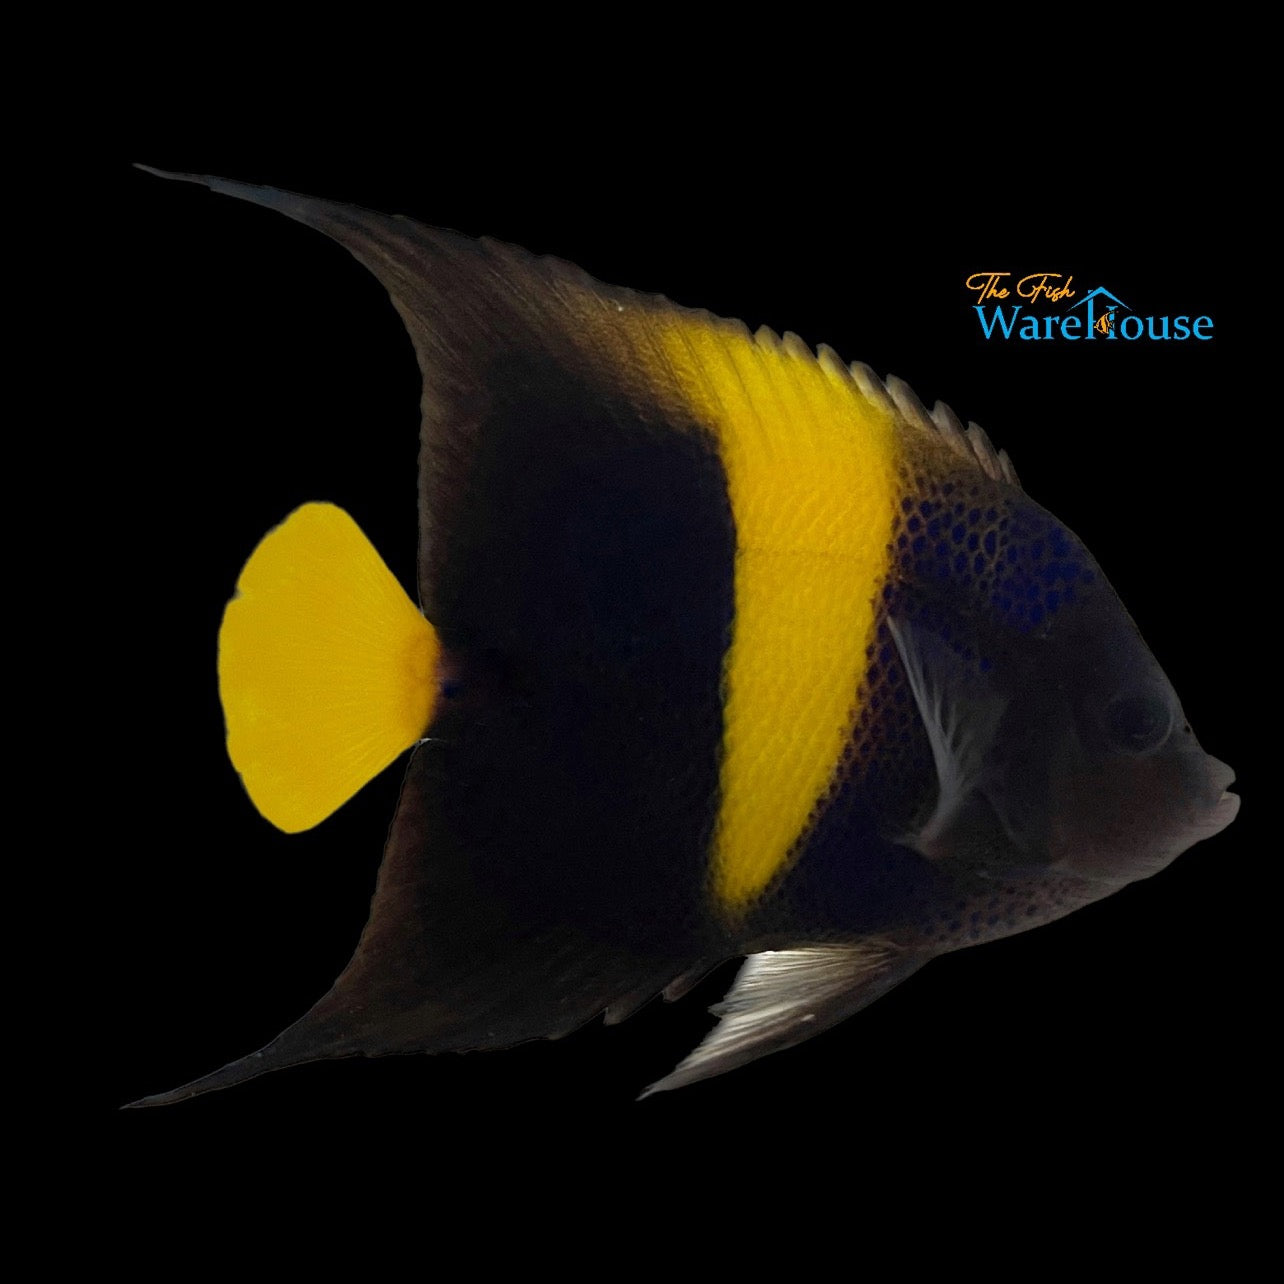 Asfur Angelfish - Adult (Pomacanthus asfur)